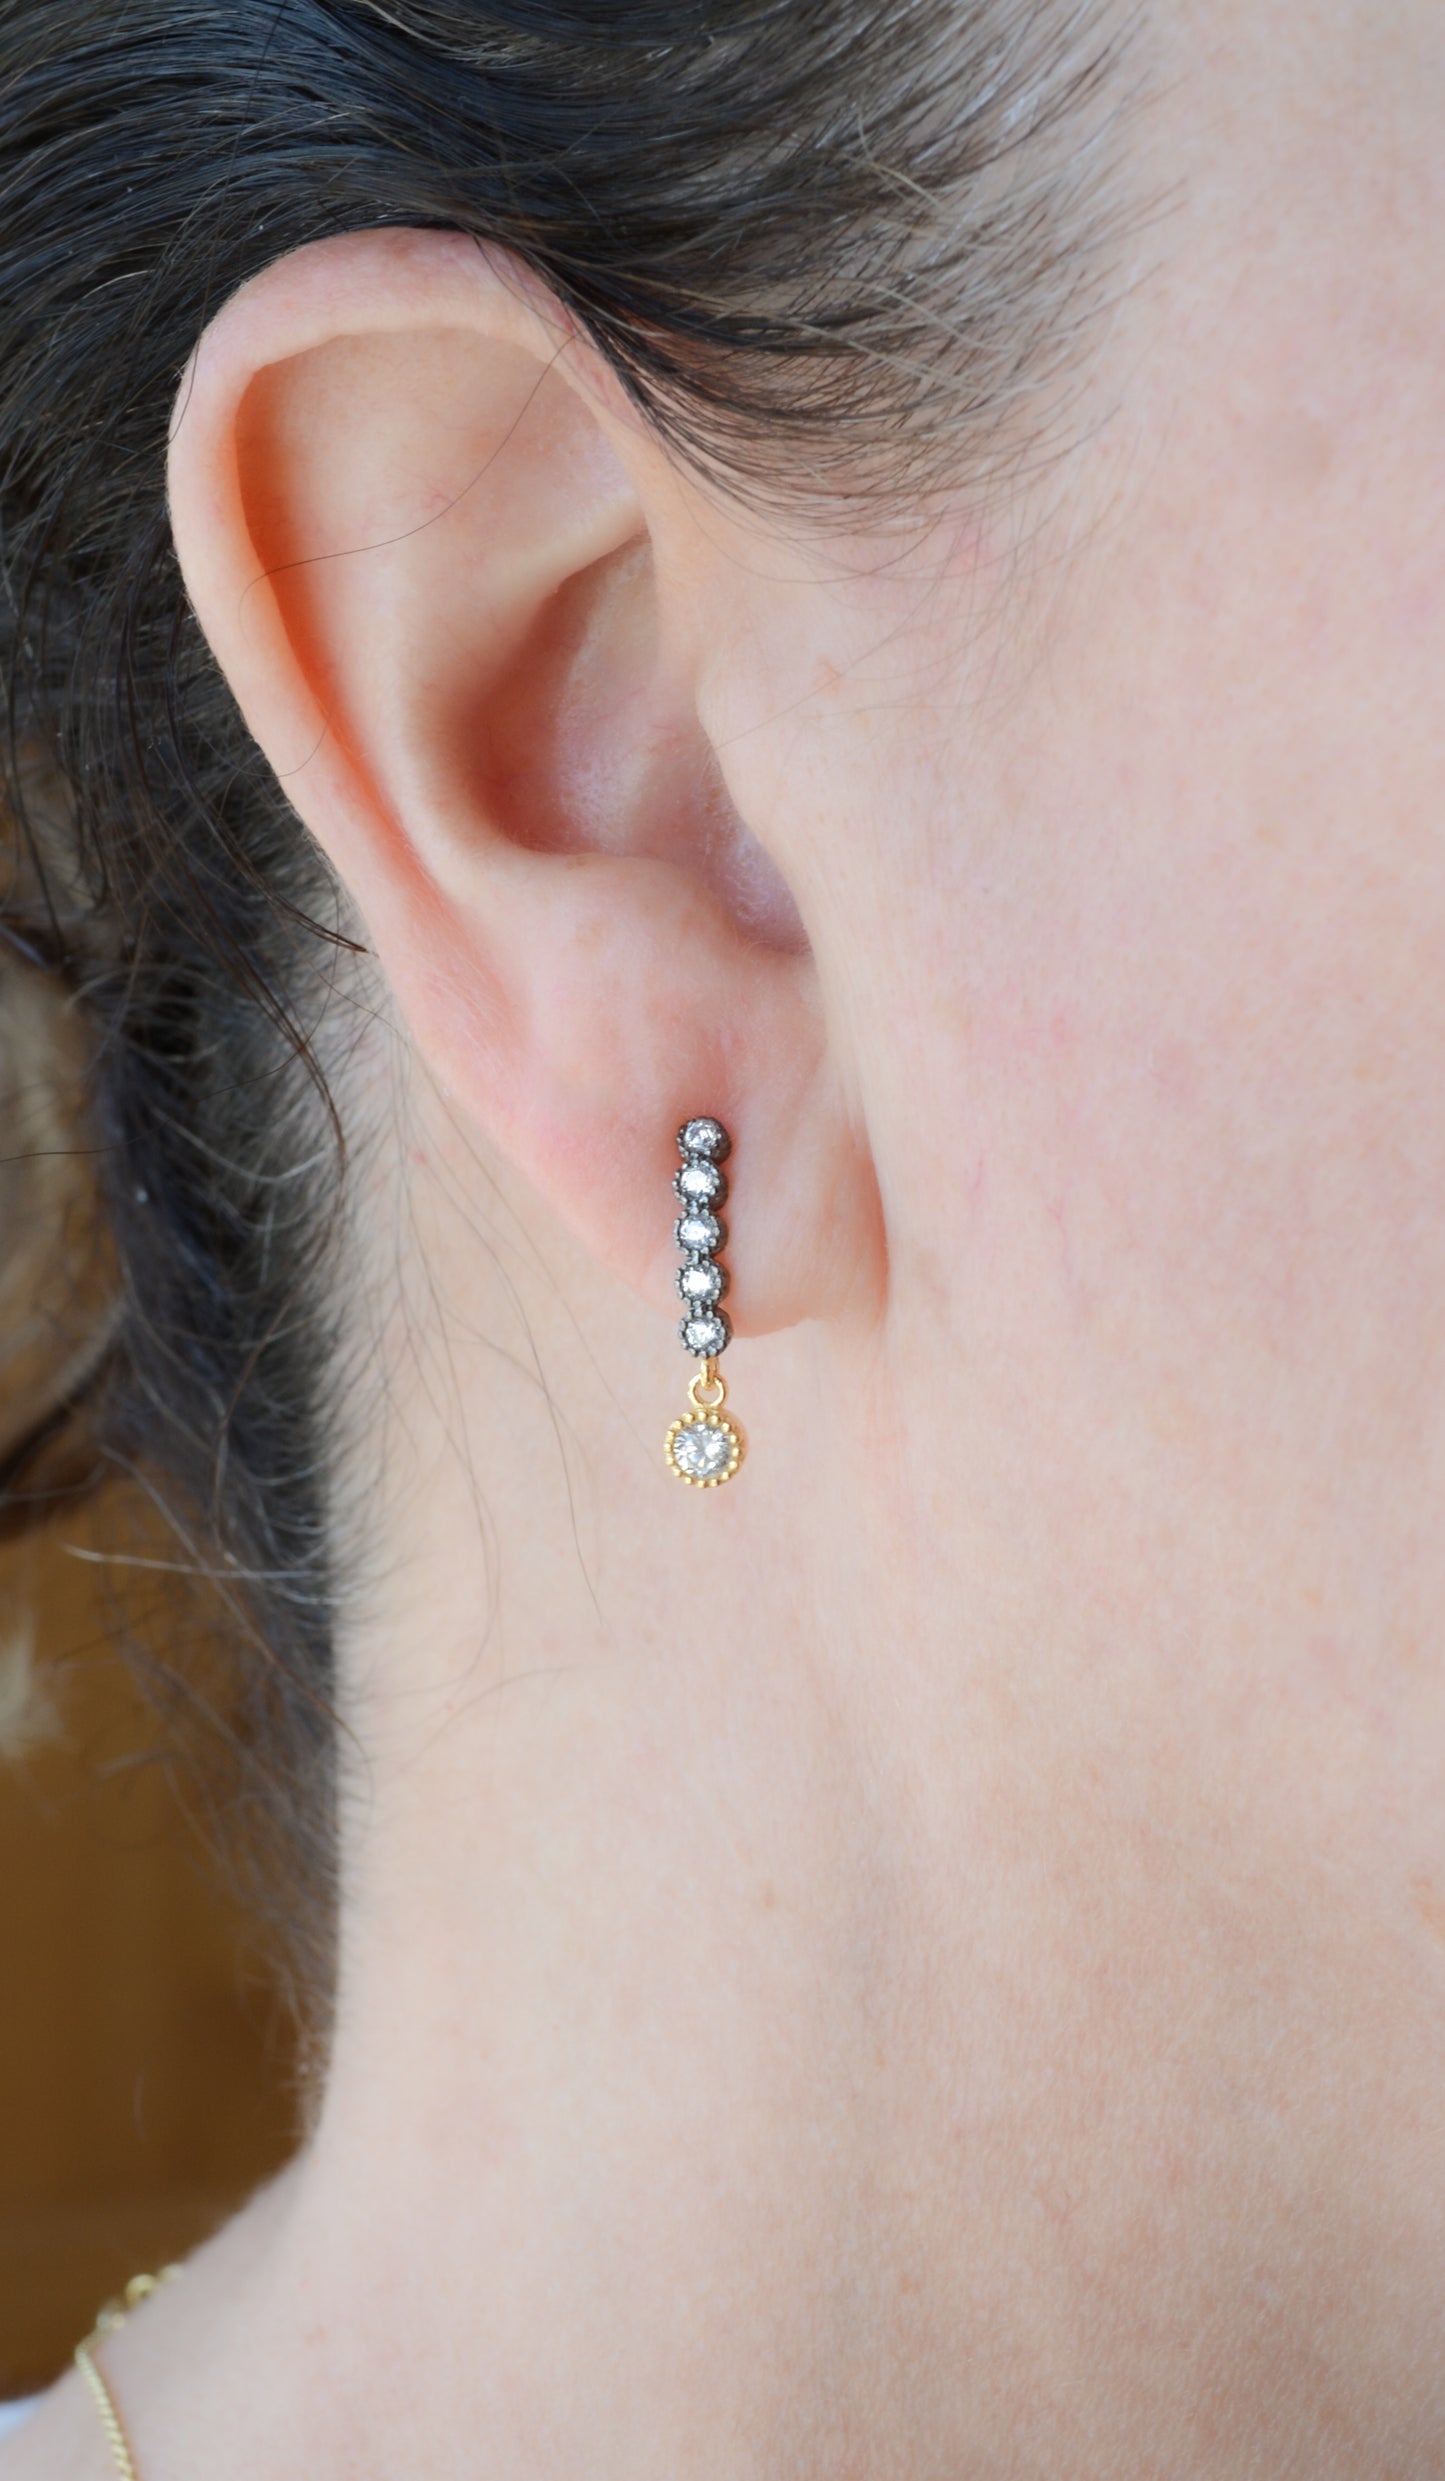 Two-tone earrings with cubic zirconia dangle